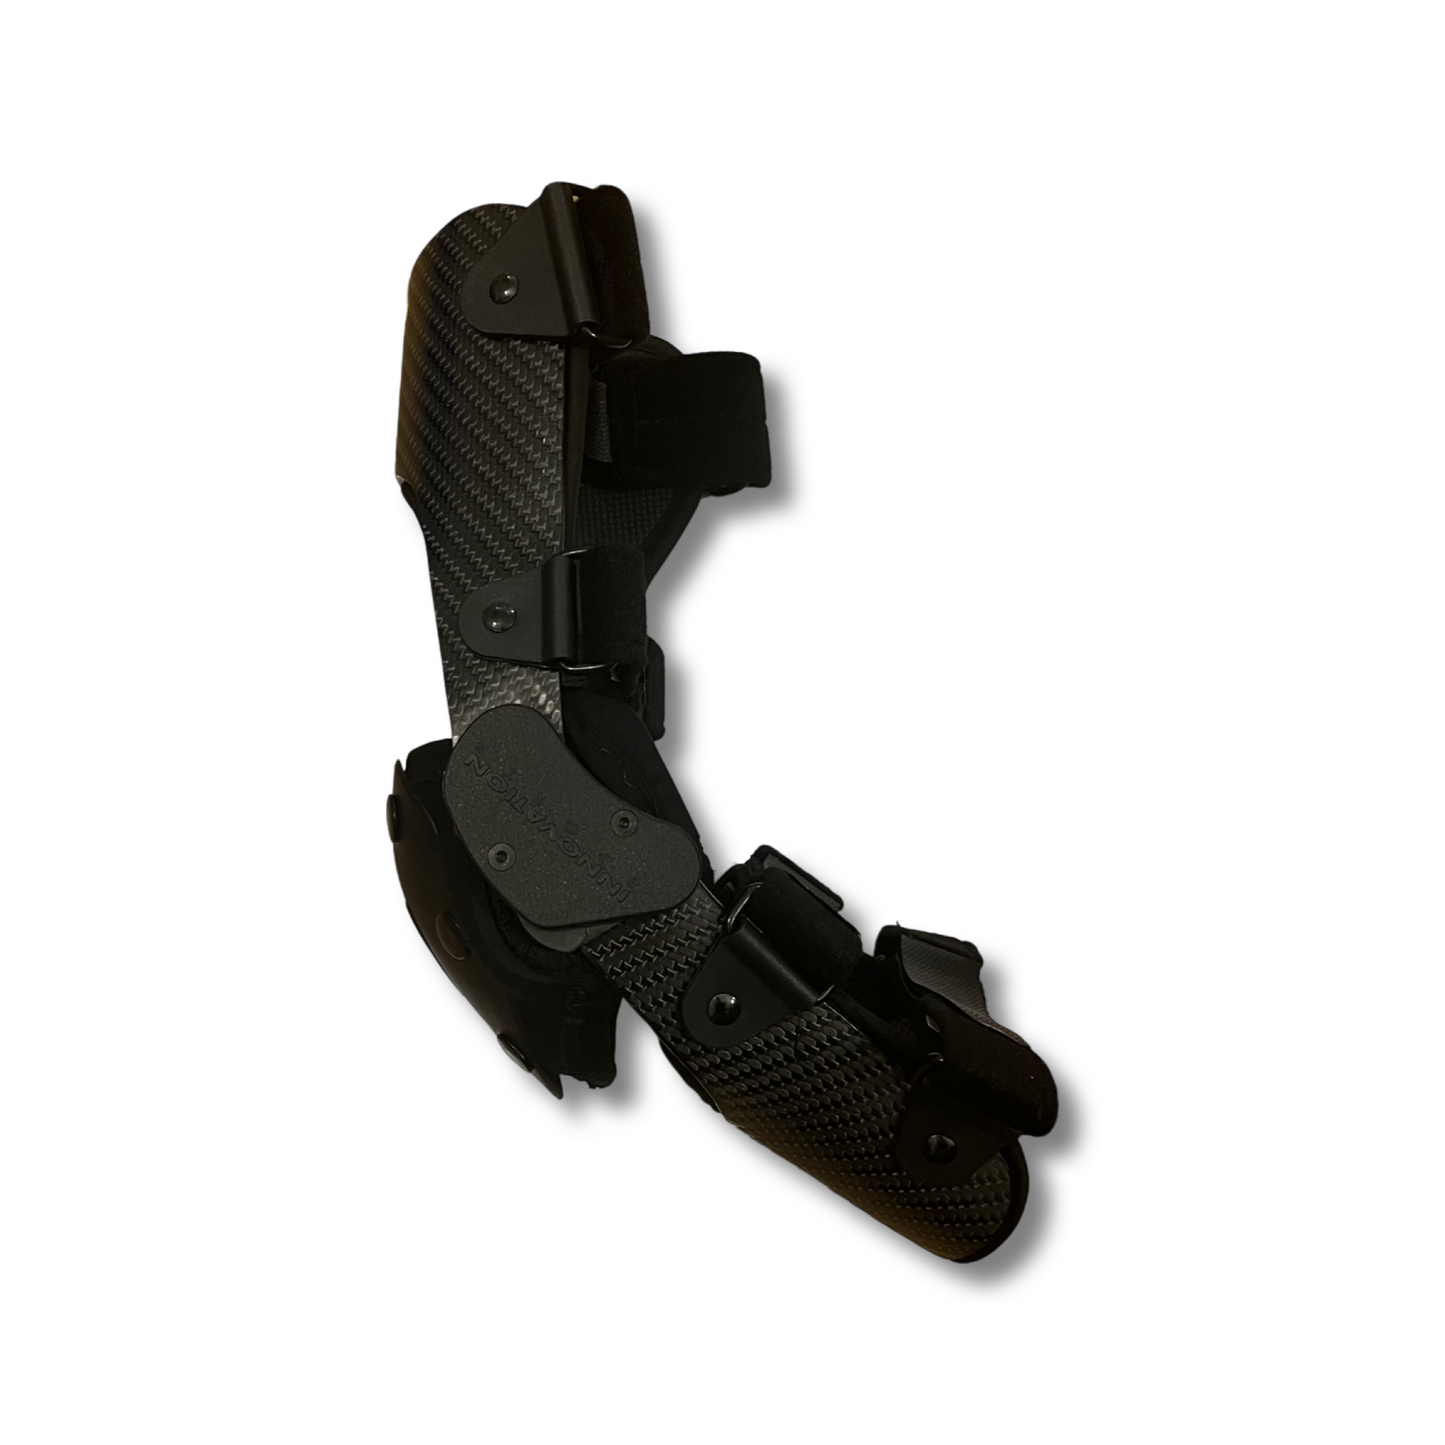 C180 Rocket knee brace Side Image with patella guard